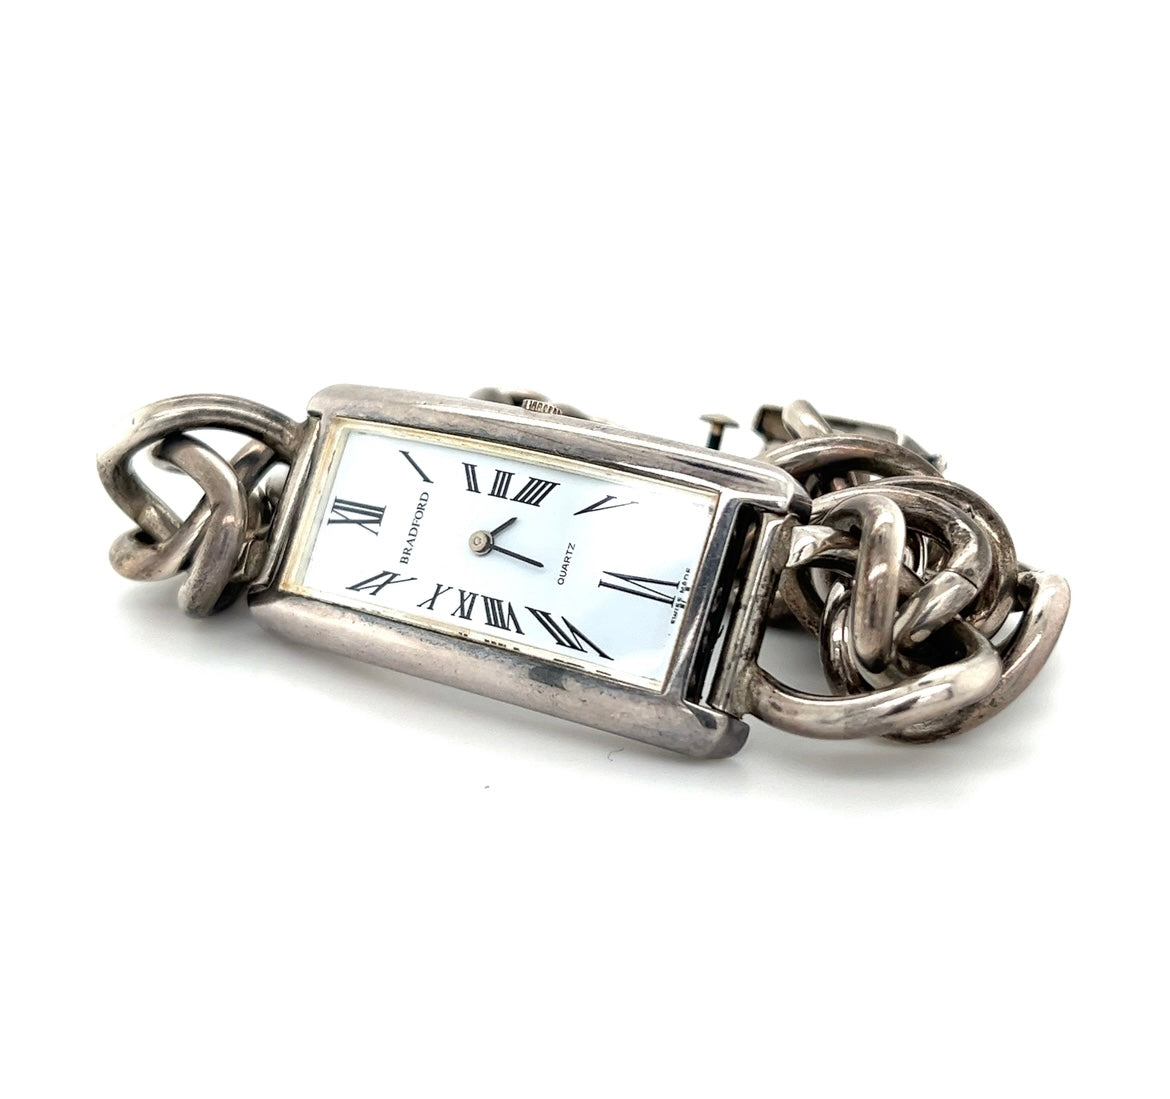 Bradford Curve X Watch with Sterling Silver Intricate Bracelet